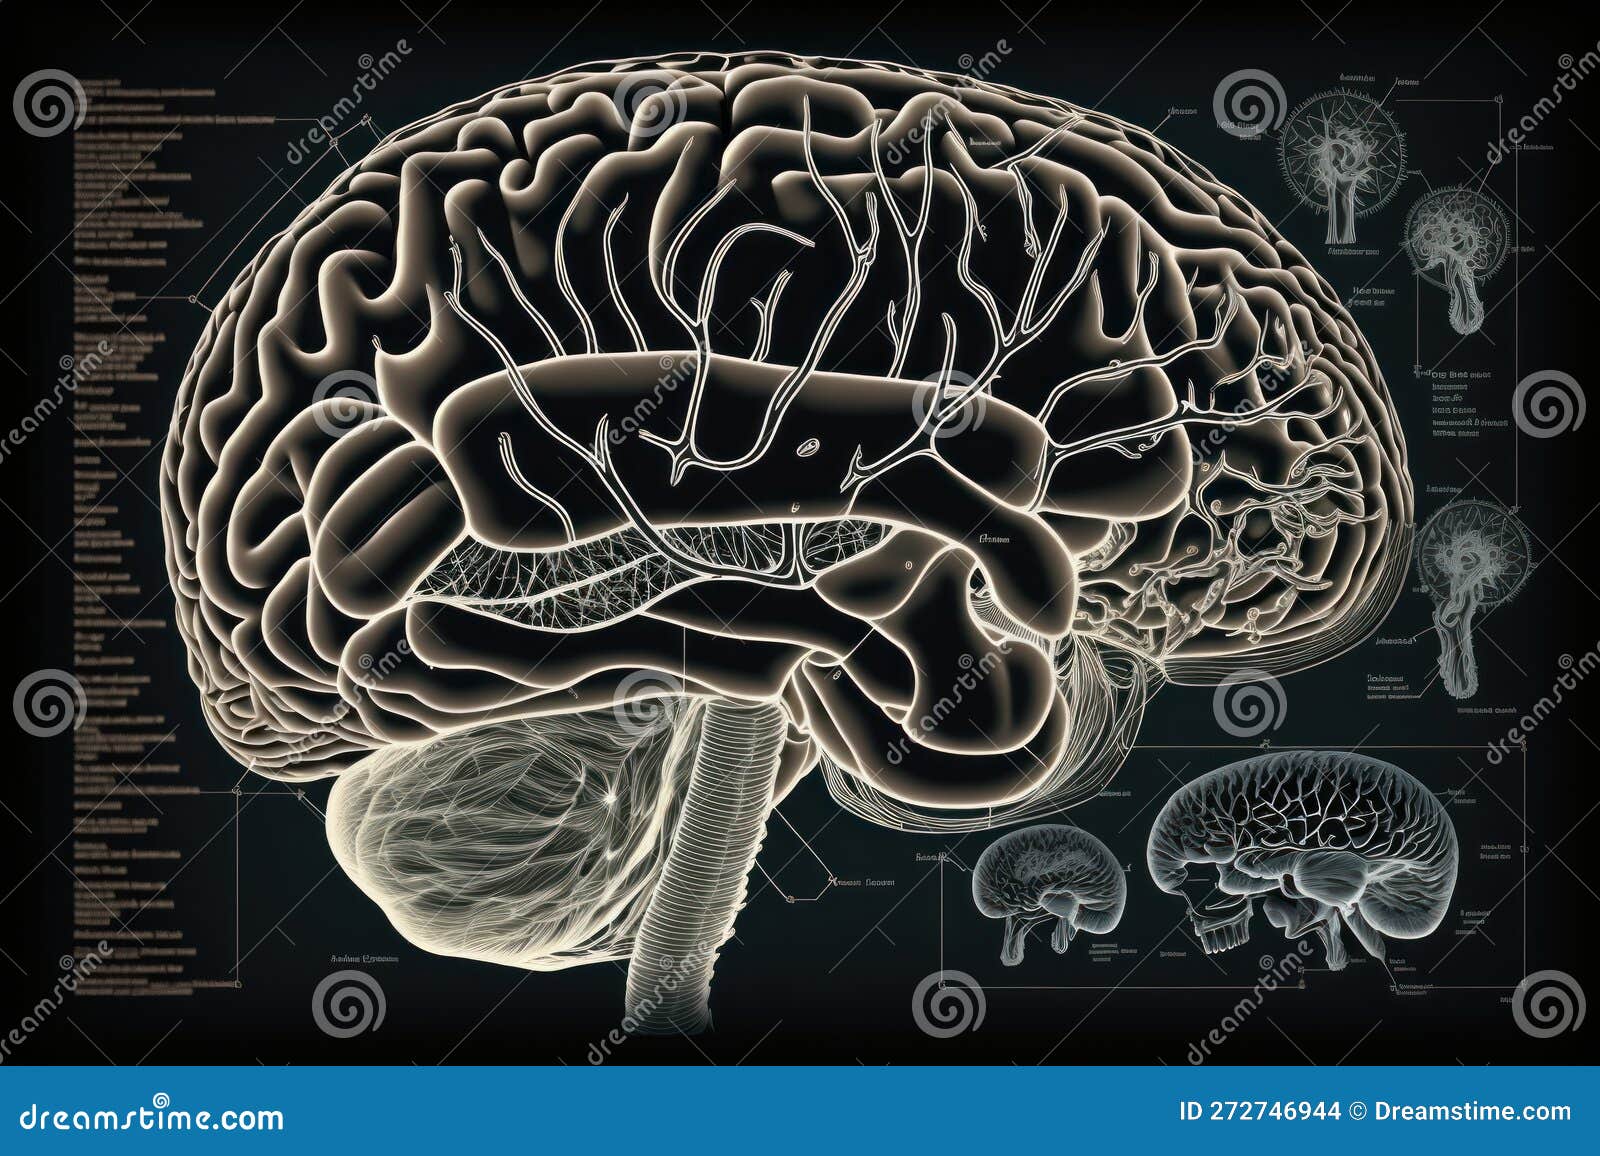 Human Brain | ClipArt ETC